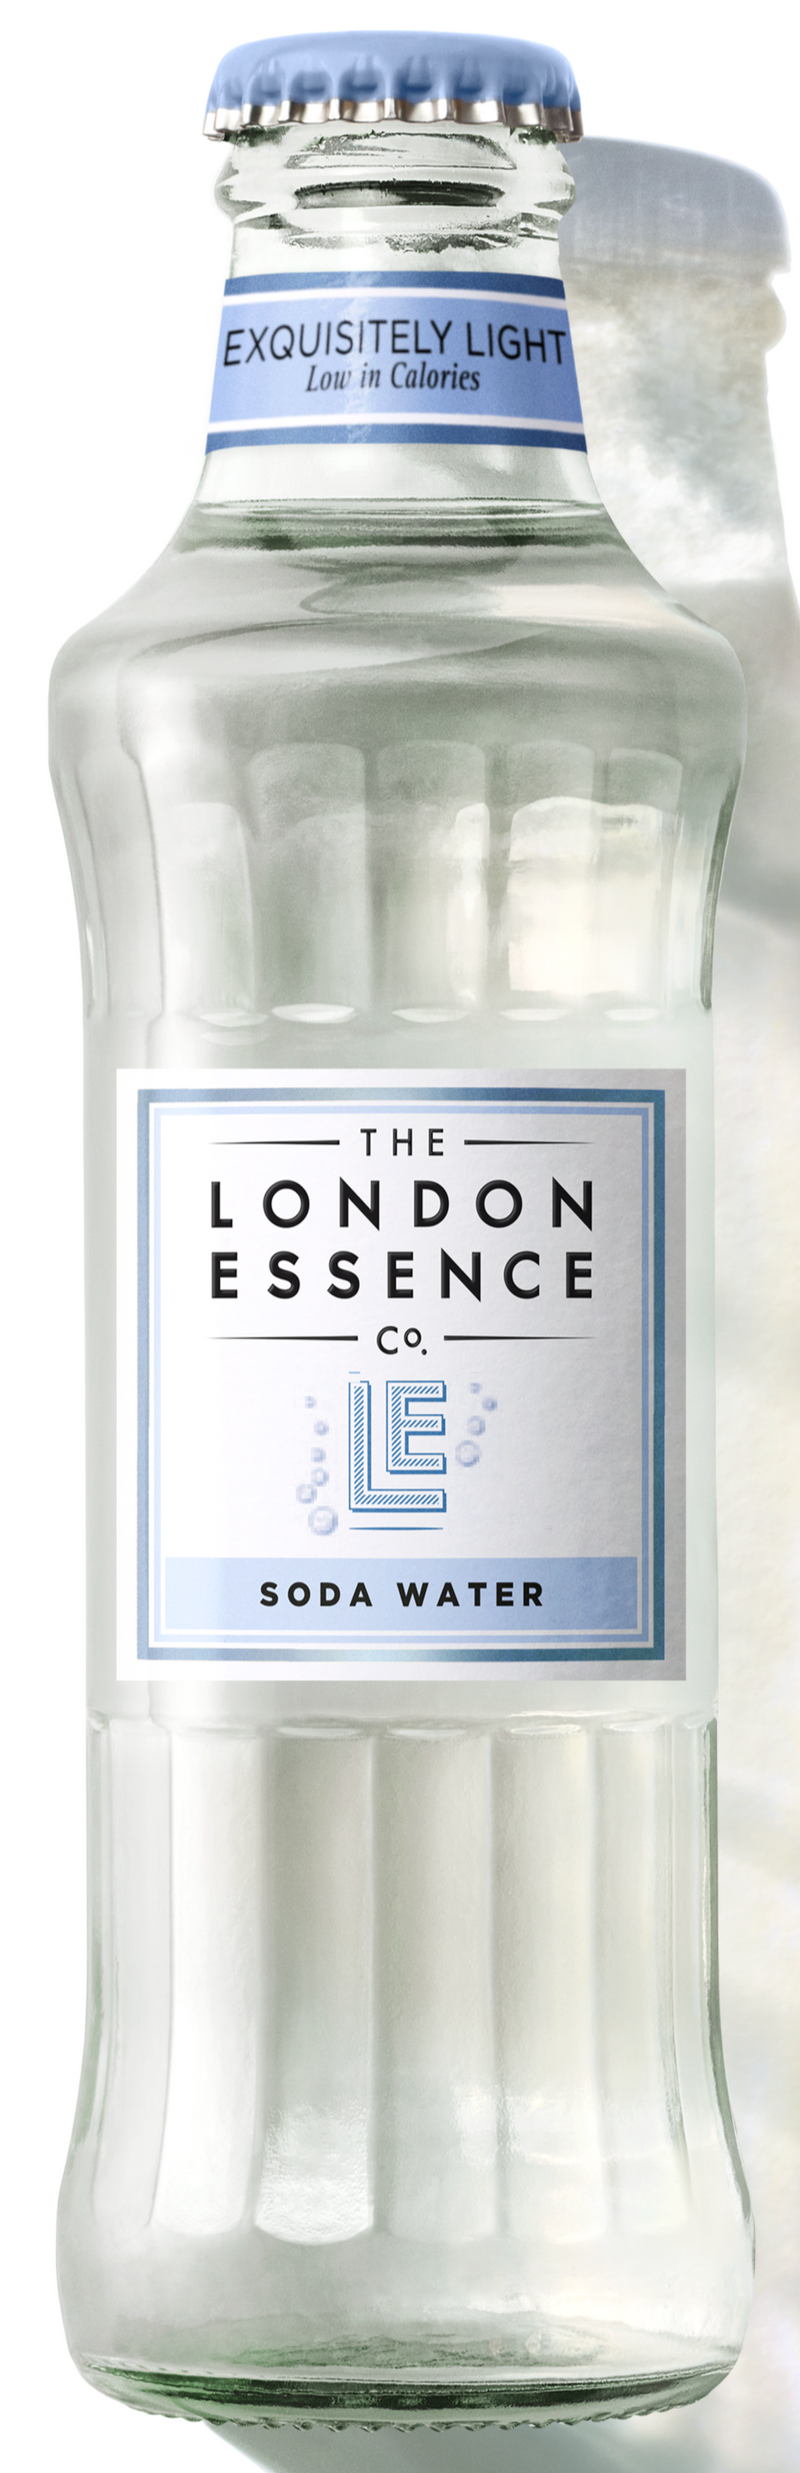 London Essence Soda Water 24x200ml